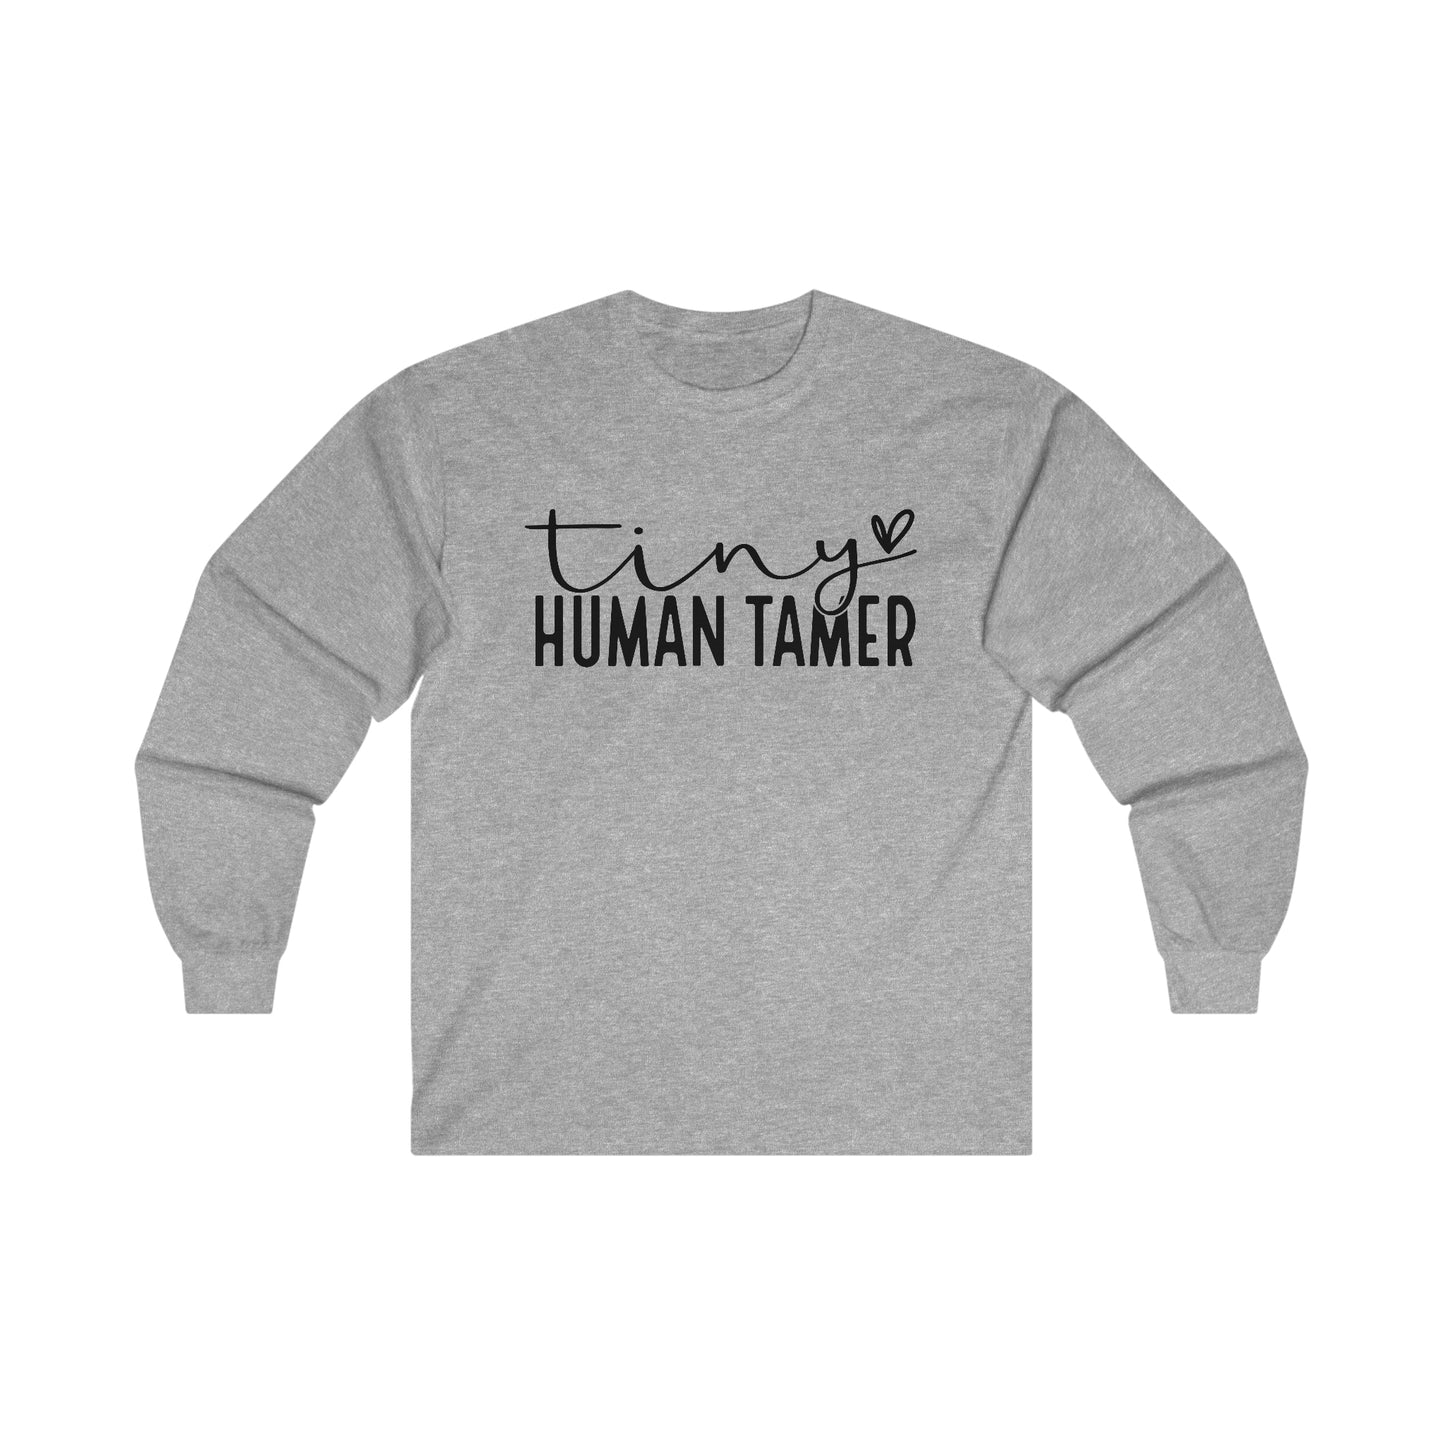 Human Tamer Long Sleeve Shirt